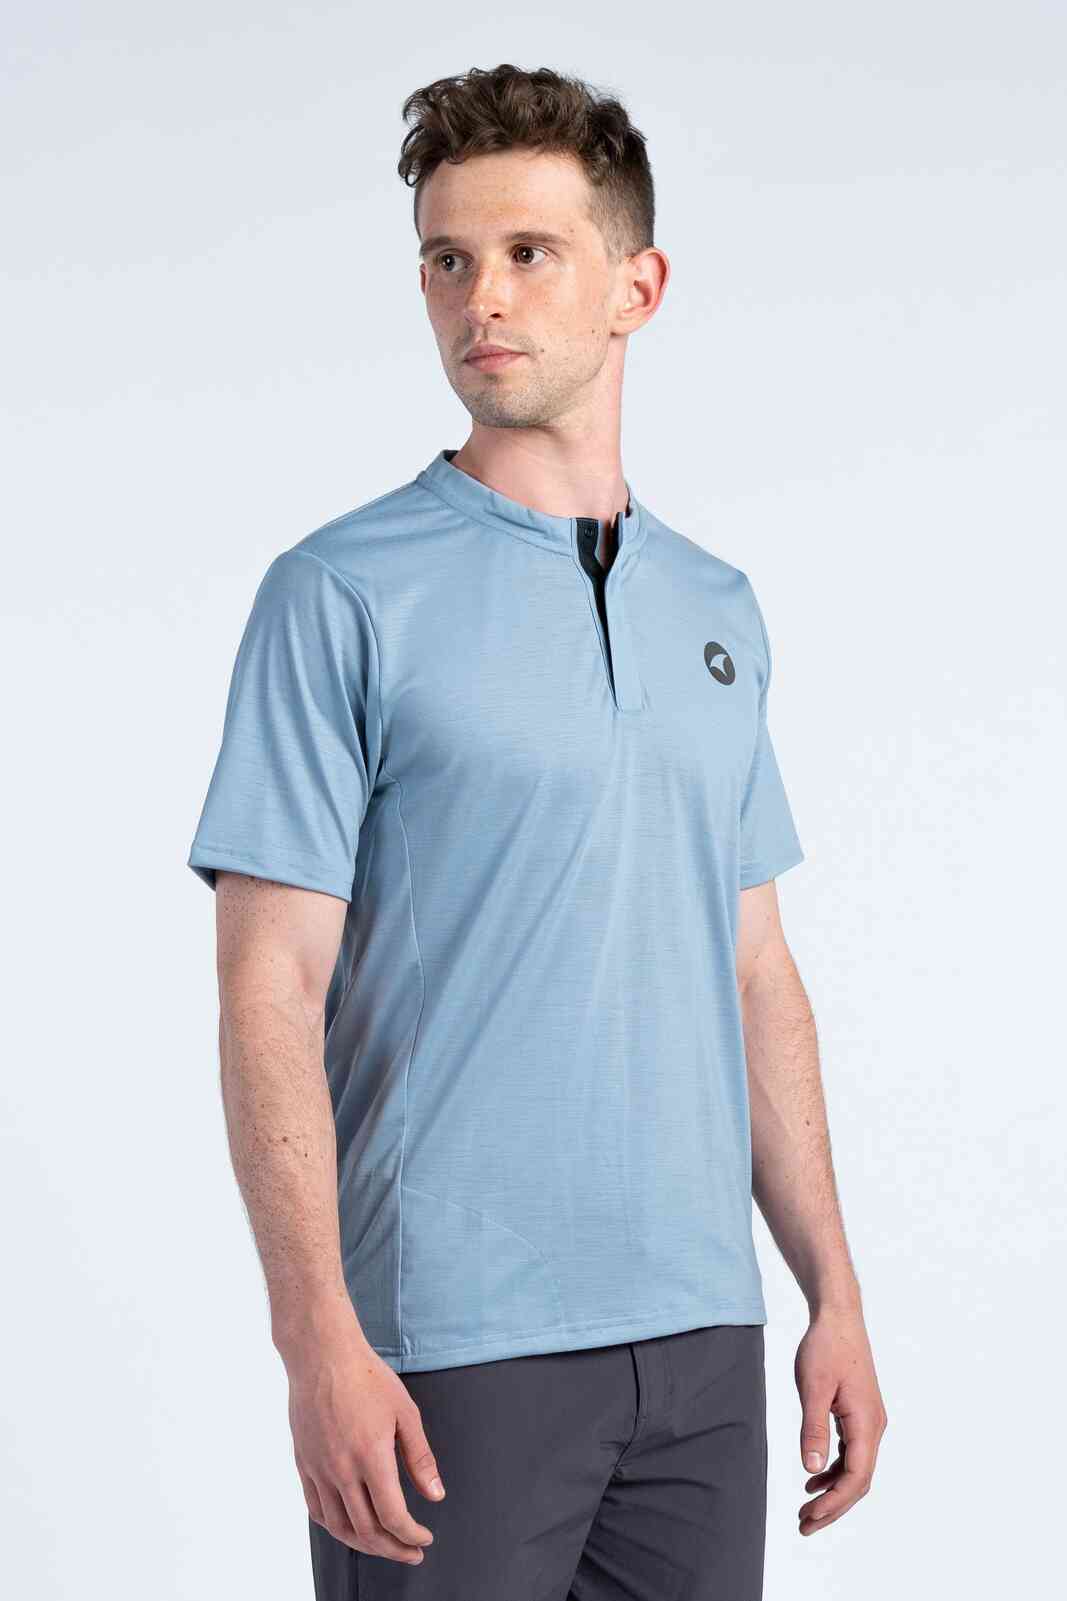 Light Blue MTB Shirt for Men - Front View